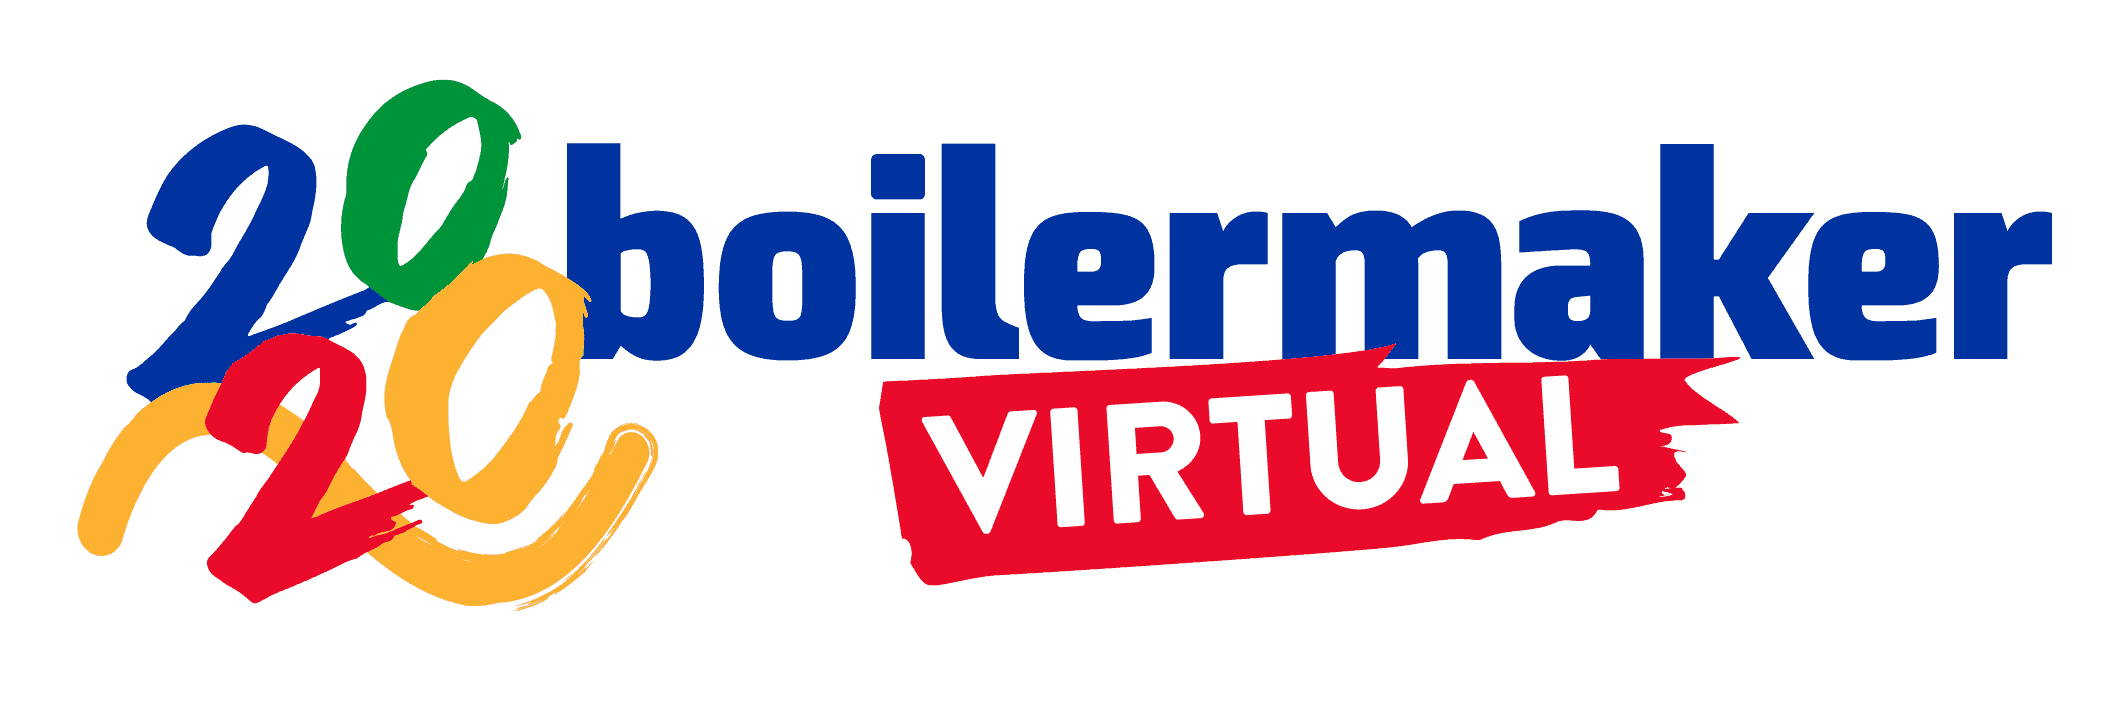 2020 Boilermaker Virtual Event logo